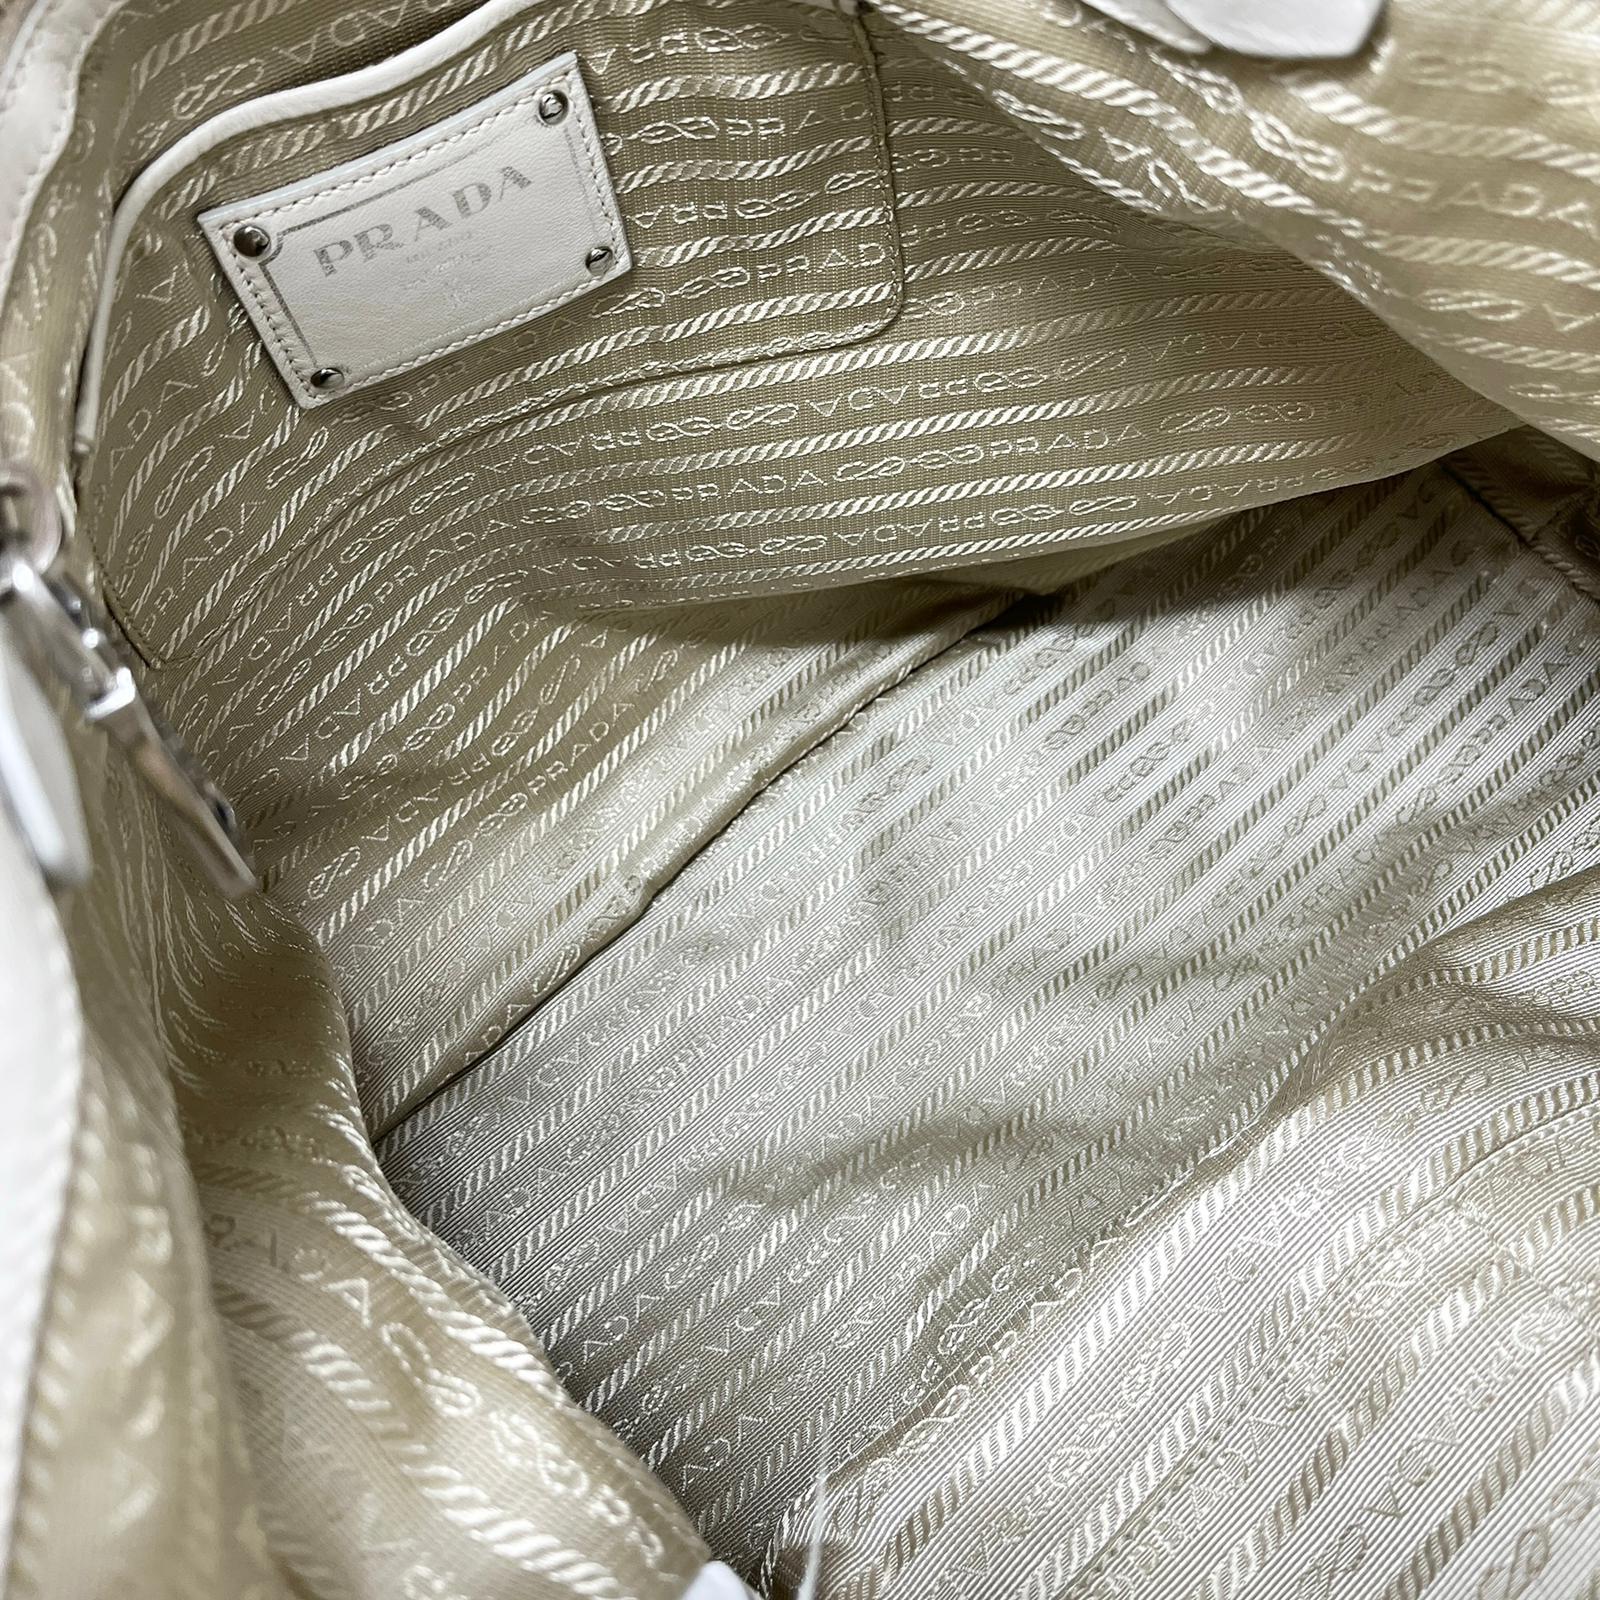 Prada Cream Mink Fur Bag with Chain Strap.  Luxury Accessories, Lot  #78051